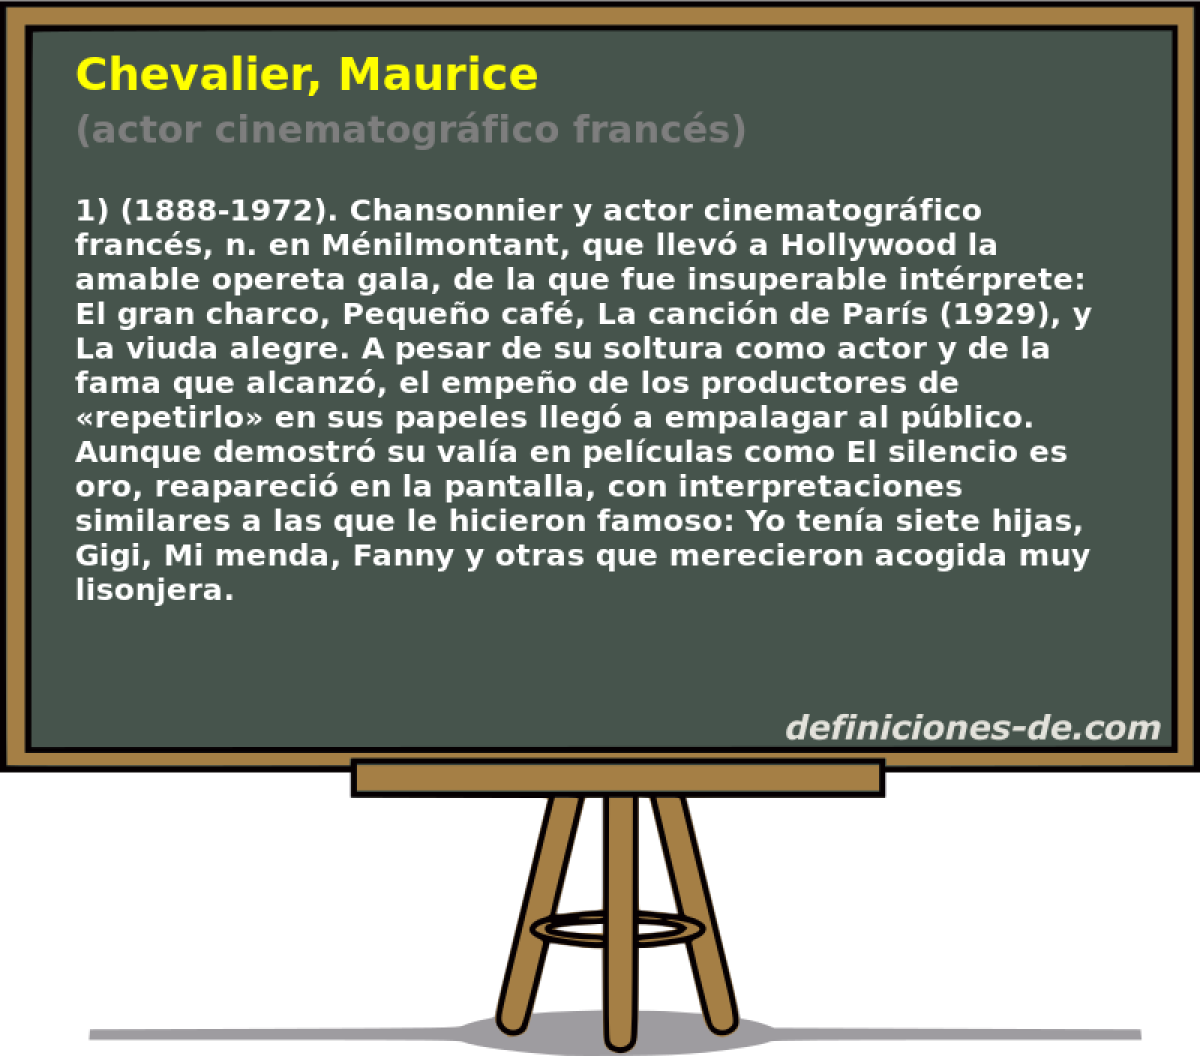 Chevalier, Maurice (actor cinematogrfico francs)